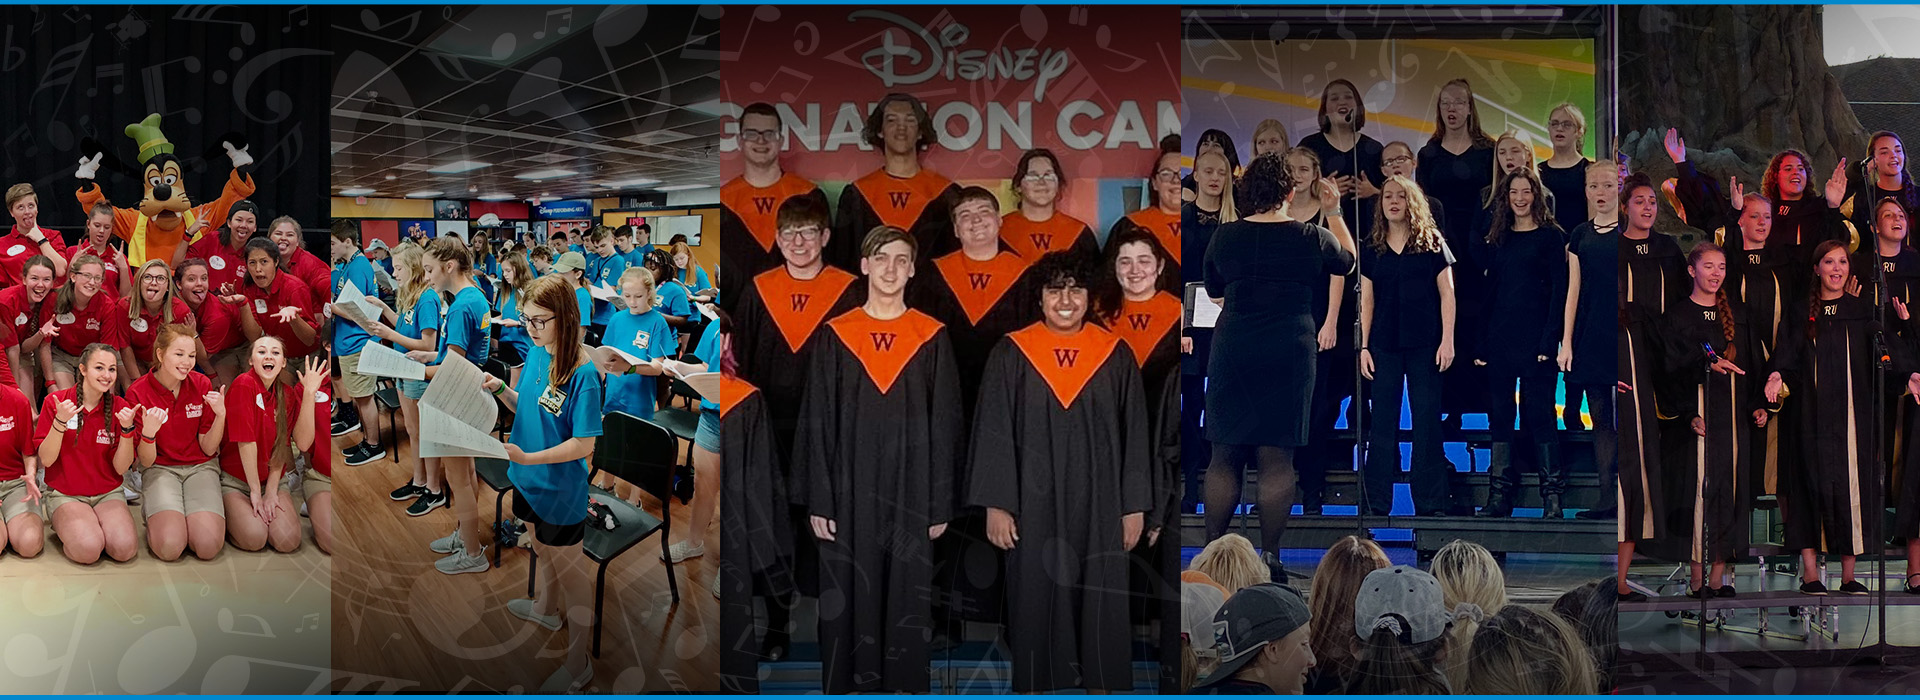 Disney Imagination Campus performance trips